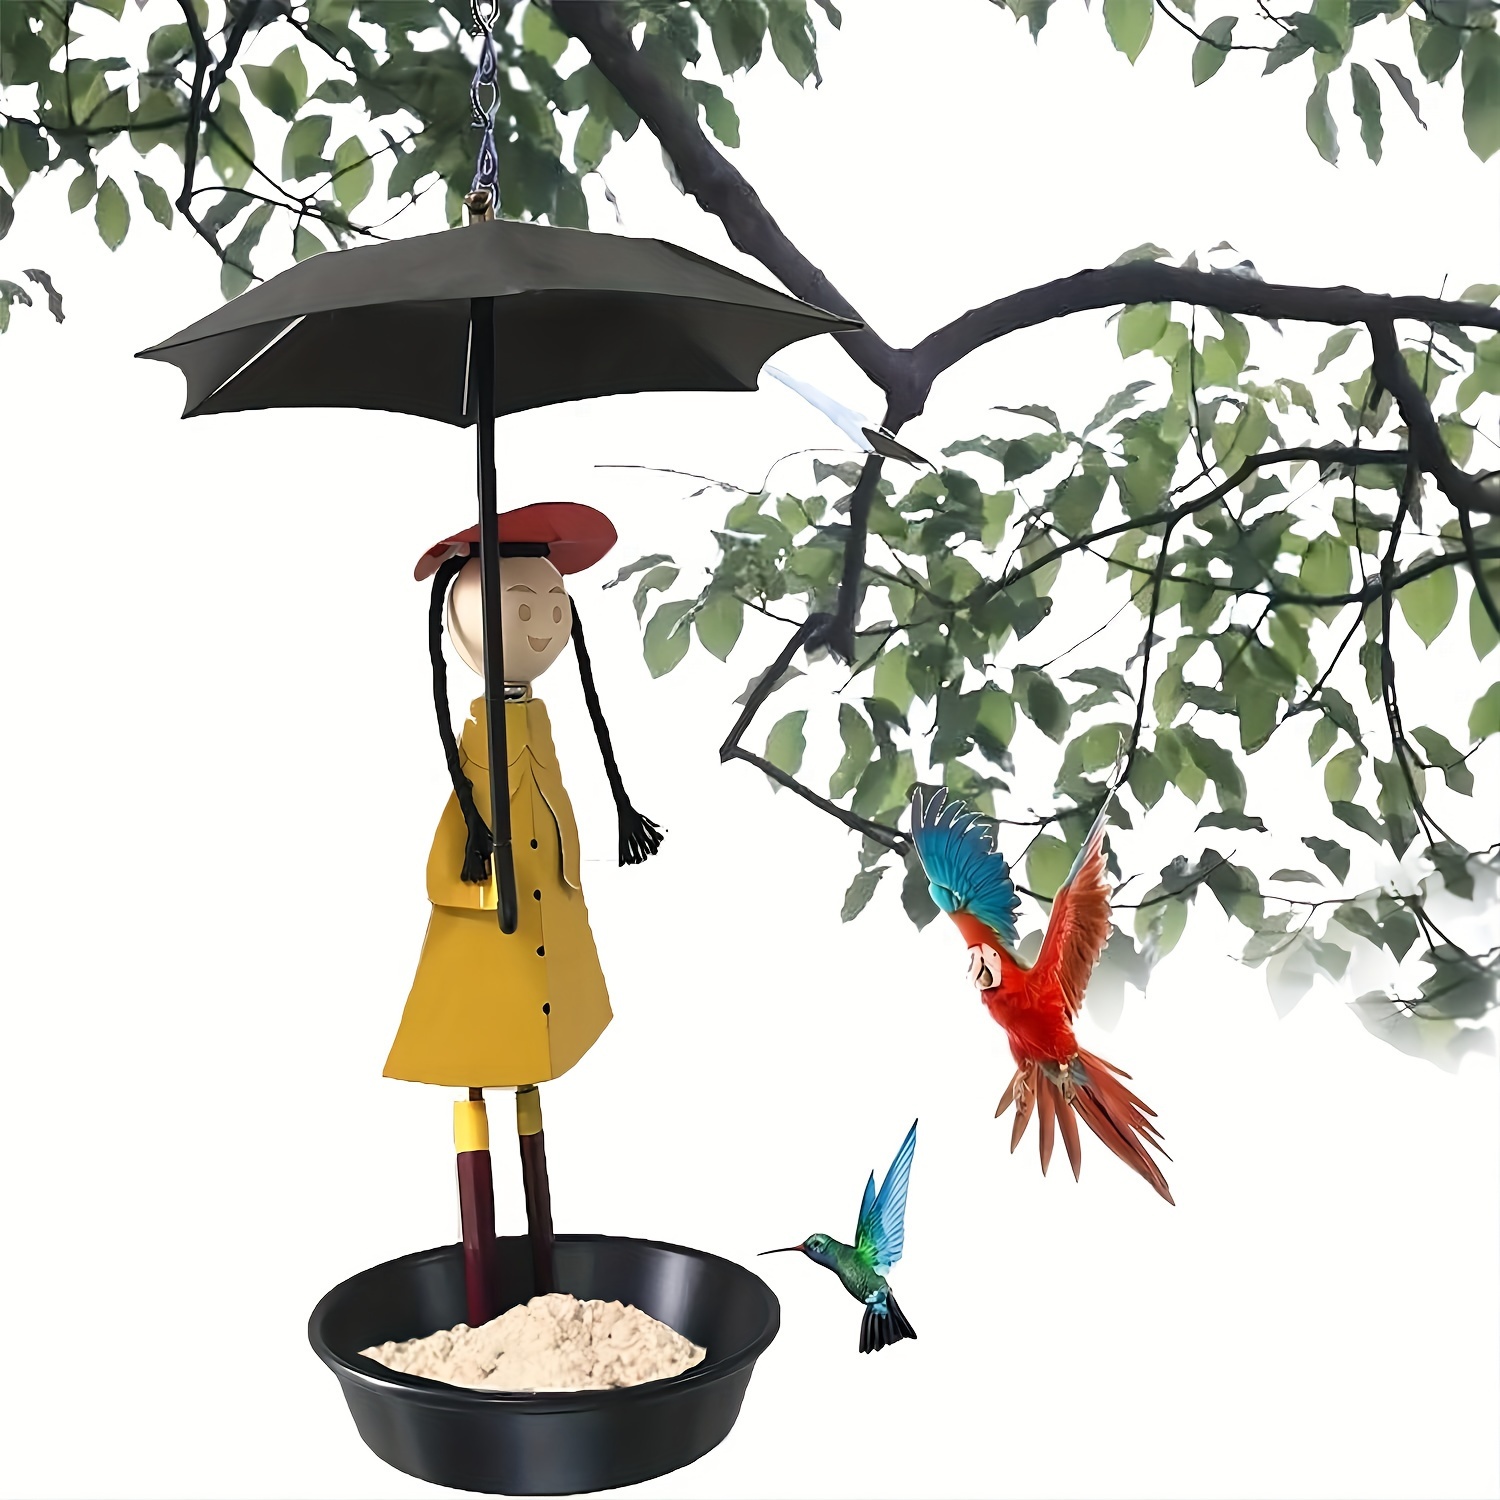 

Metal Hummingbird Feeder With Hanging Chain - Outdoor Garden Decorative Bird Bath Tray With Umbrella, Wild Bird Feeder For Patio Or Yard, No Battery Needed, Easy Assembly